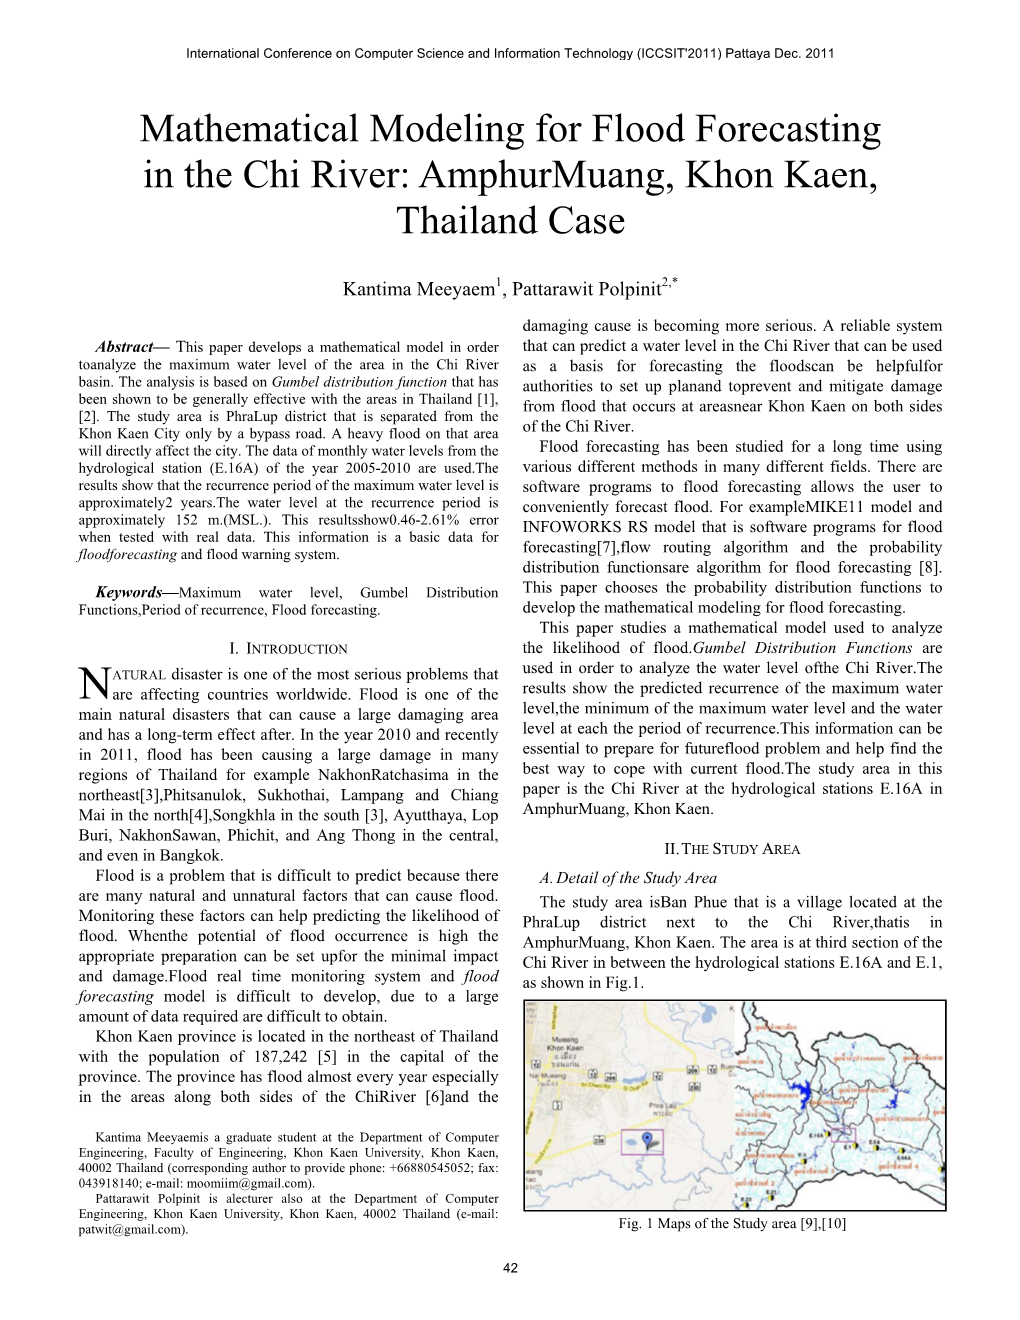 Mathematical Modeling for Flood Forecasting in the Chi River: Amphurmuang, Khon Kaen, Thailand Case